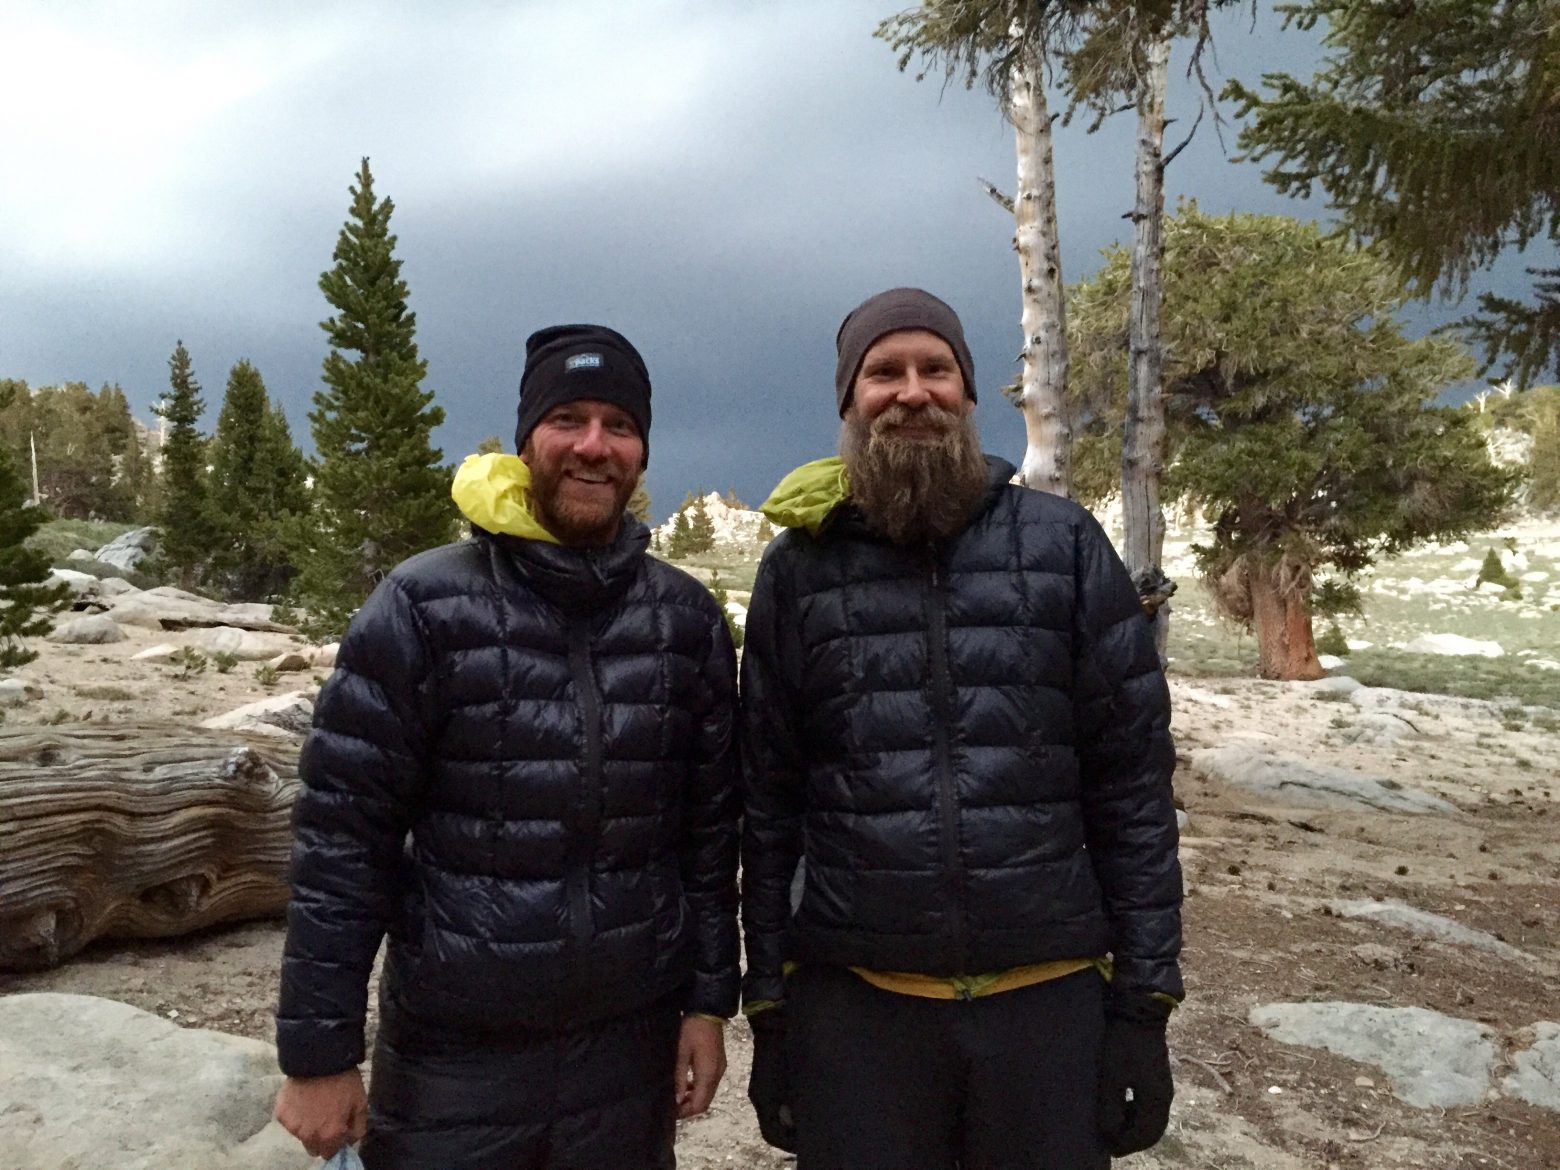 Mountain Man and Beardoh looking like twins